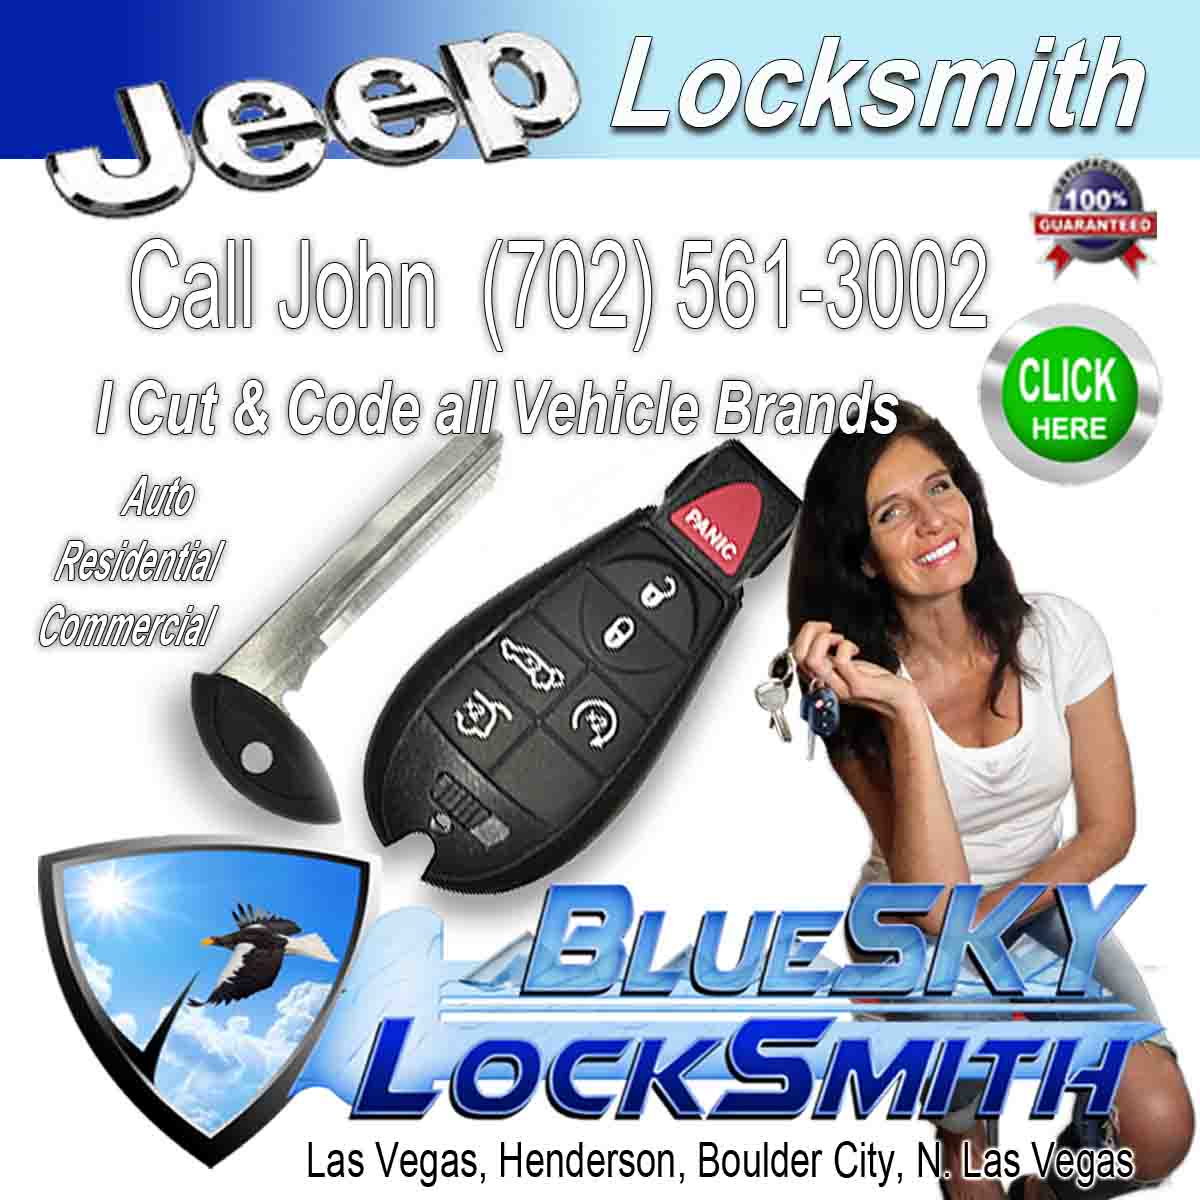 Locksmith Jeep Locksmith